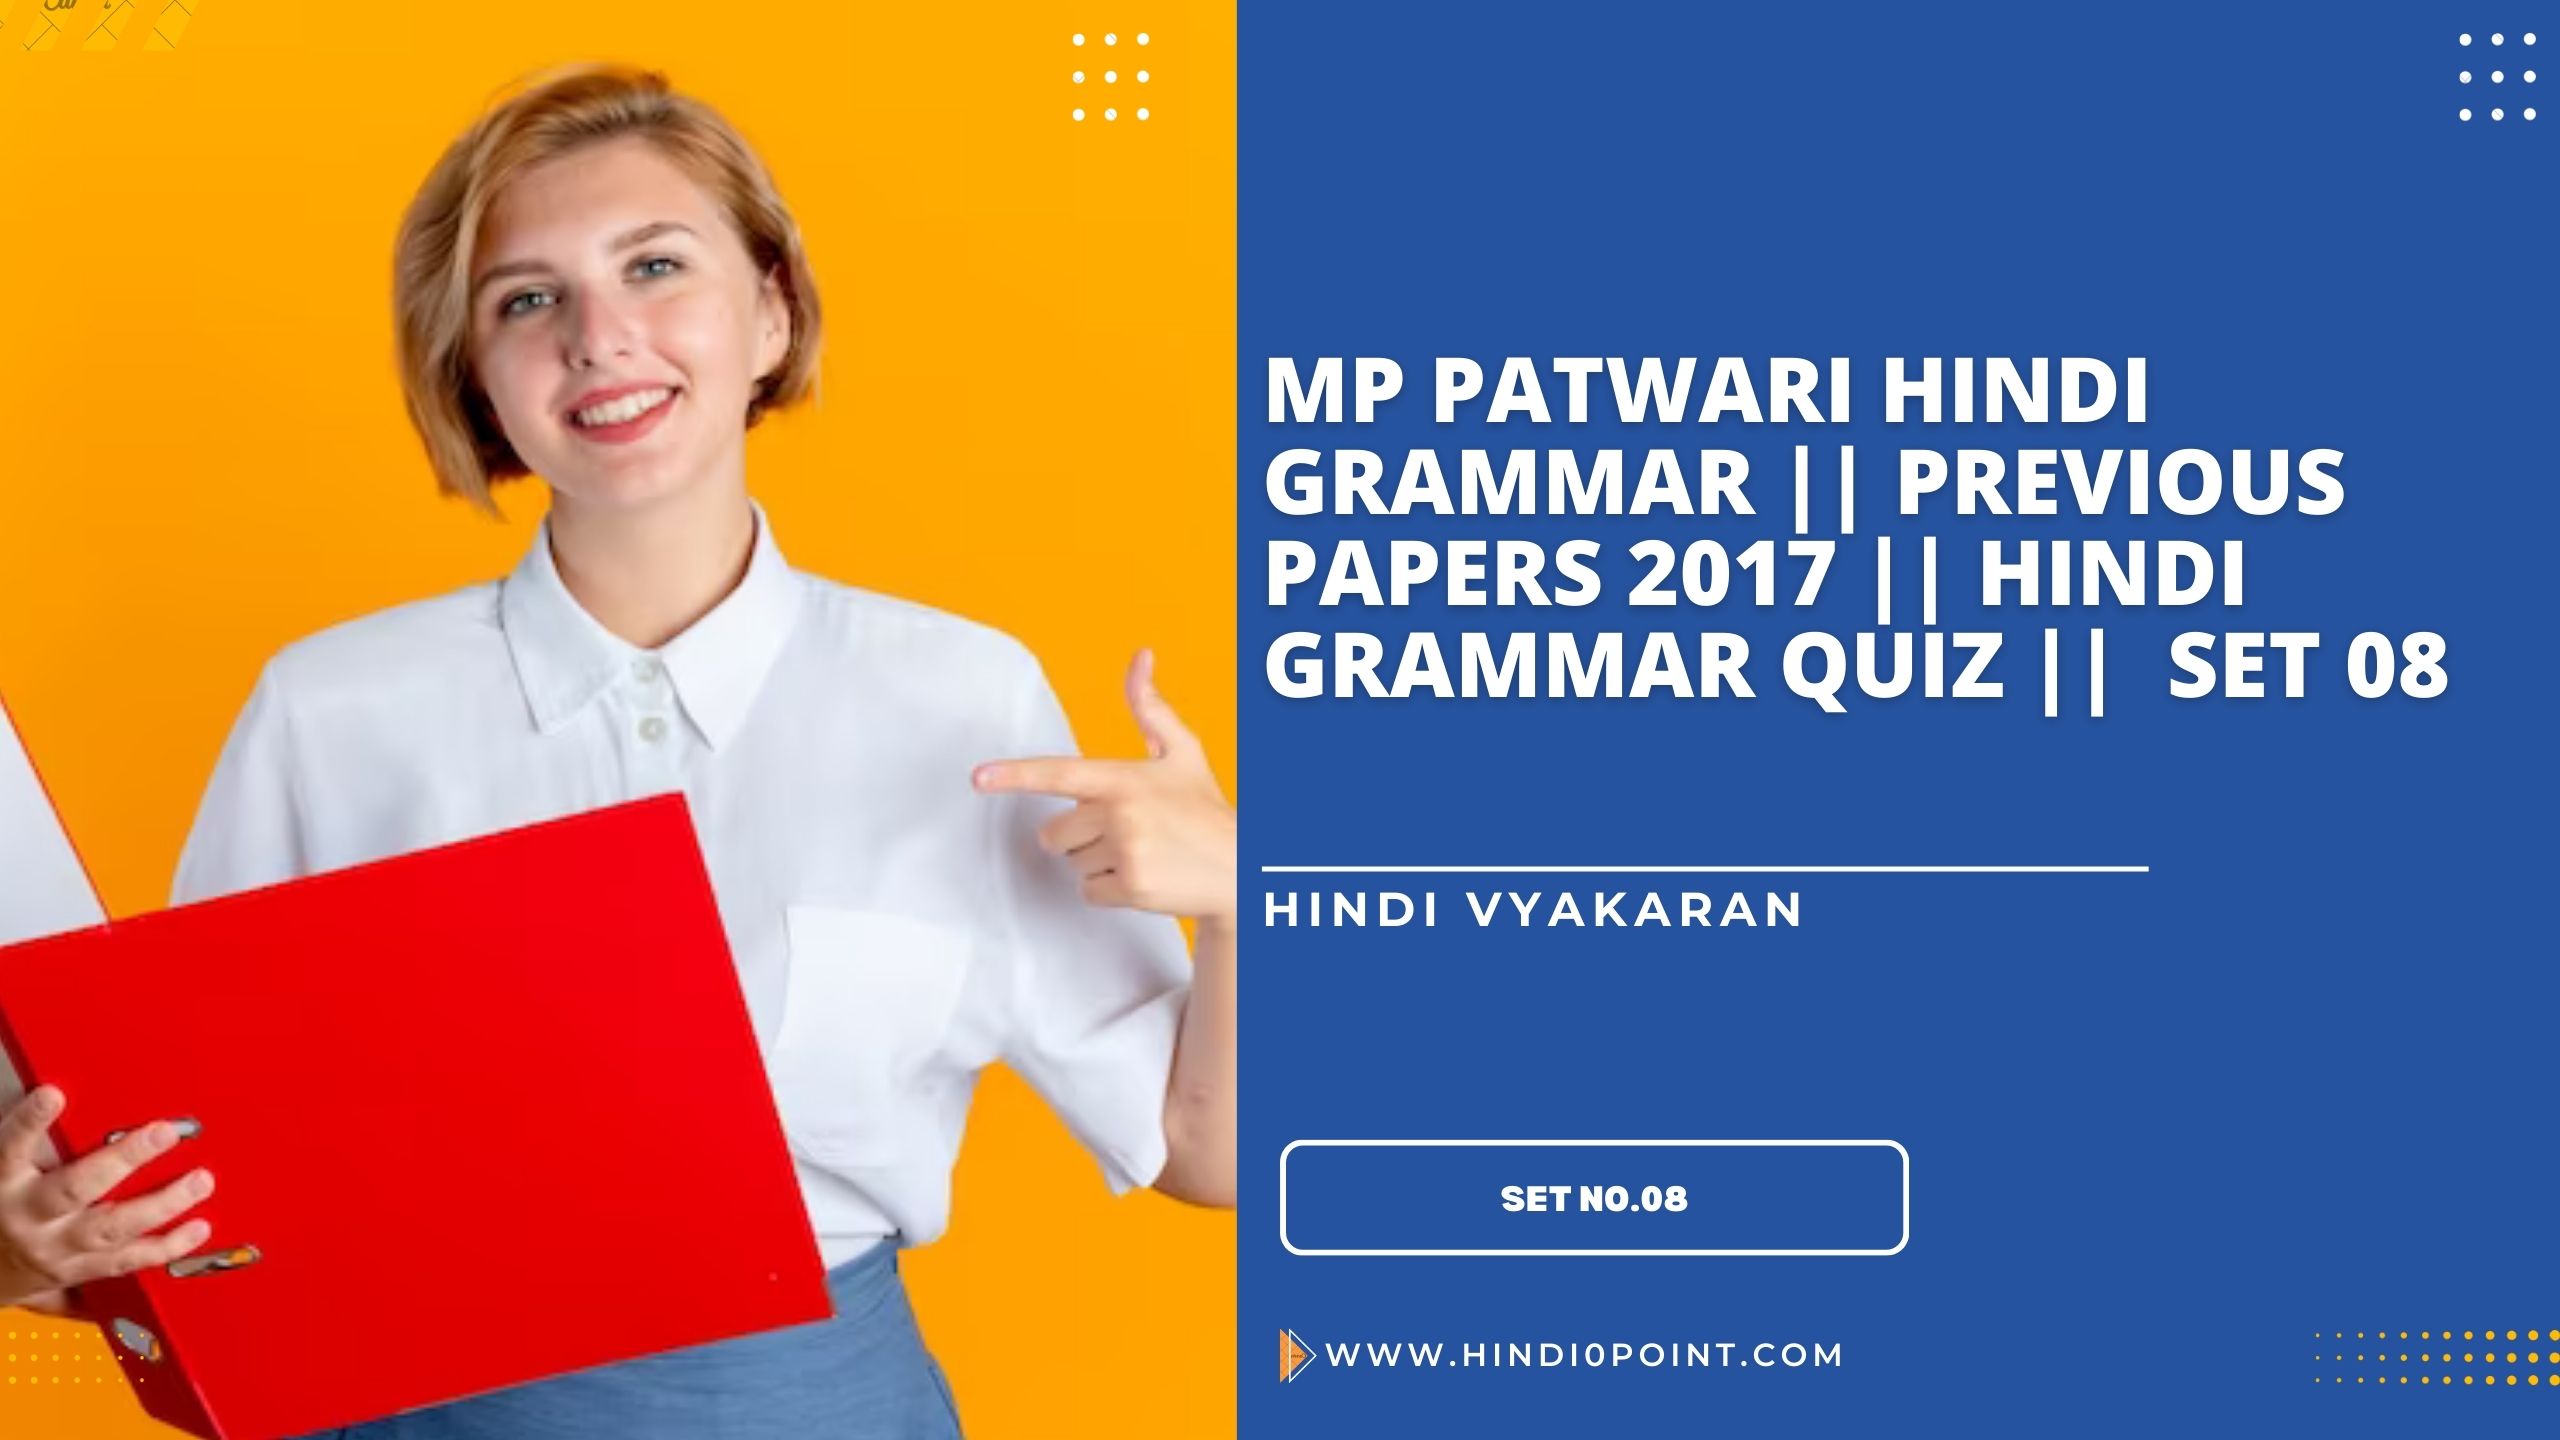 Mp patwari hindi grammar || previous papers 2017 || hindi grammar quiz || set 08